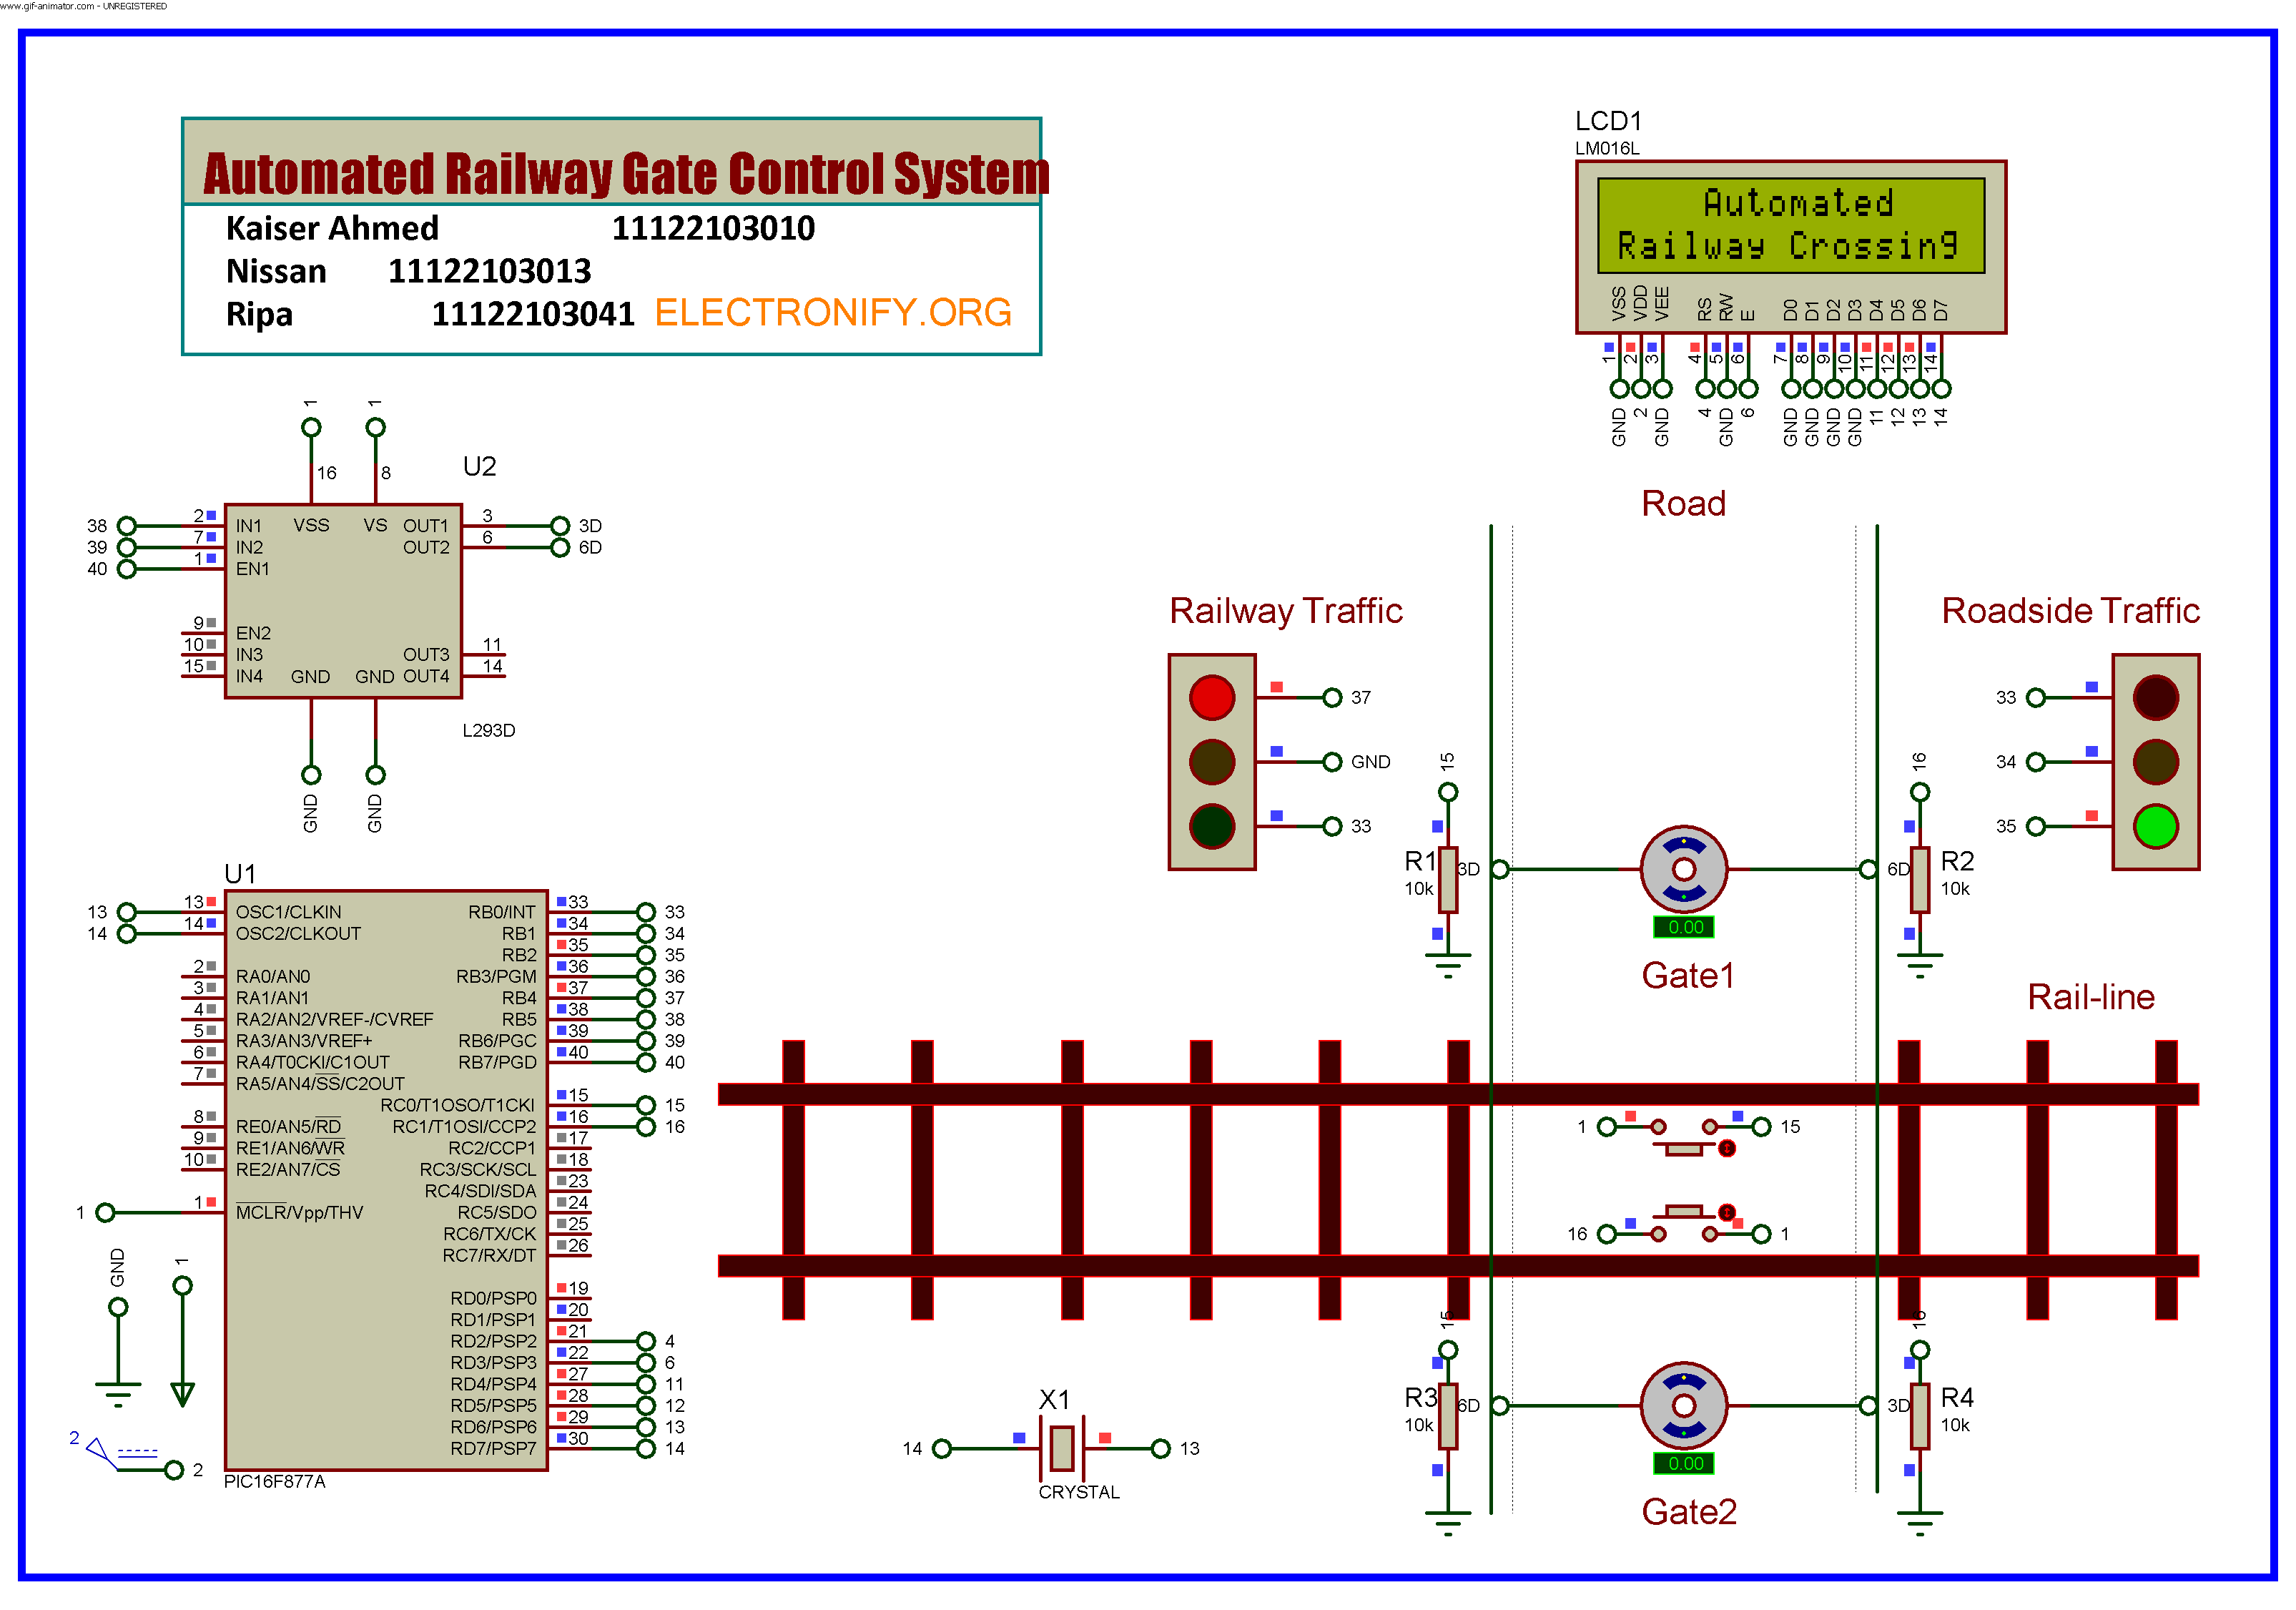 Automatic Railway Gate Control System Using PIC16F877A microcontroller schematioc diagram